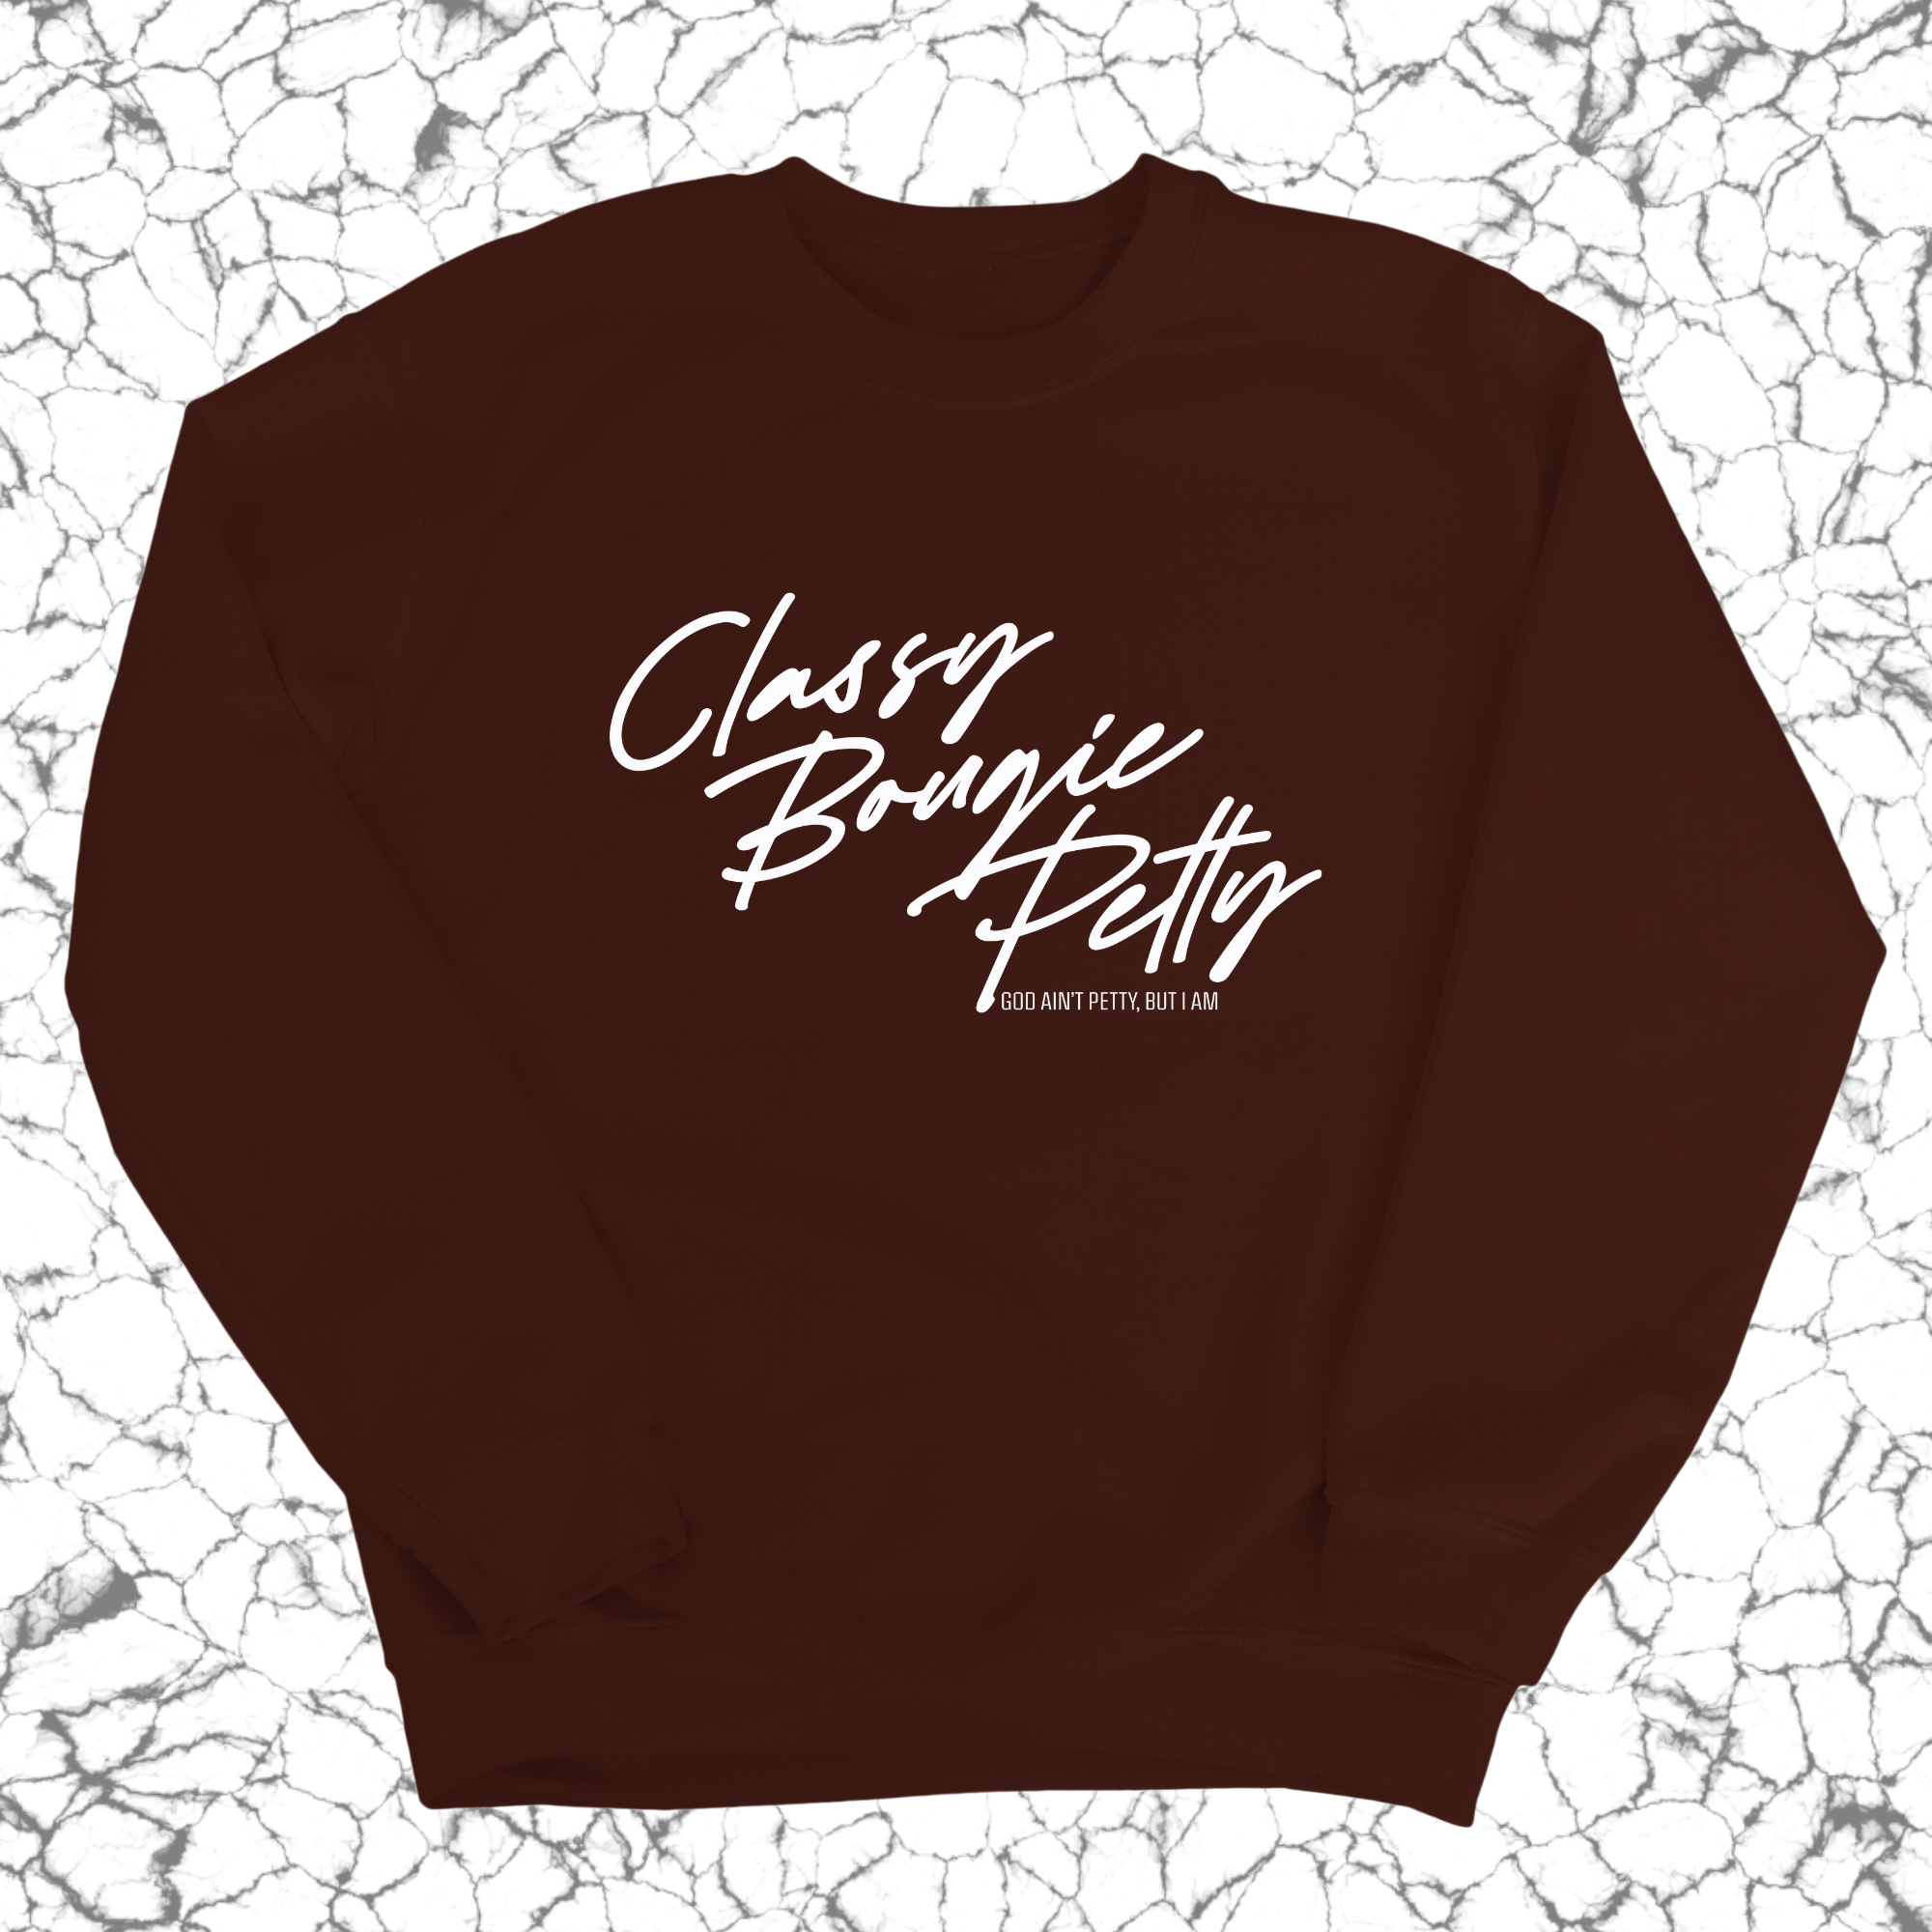 Classy Bougie Petty Unisex Sweatshirt-Sweatshirt-The Original God Ain't Petty But I Am